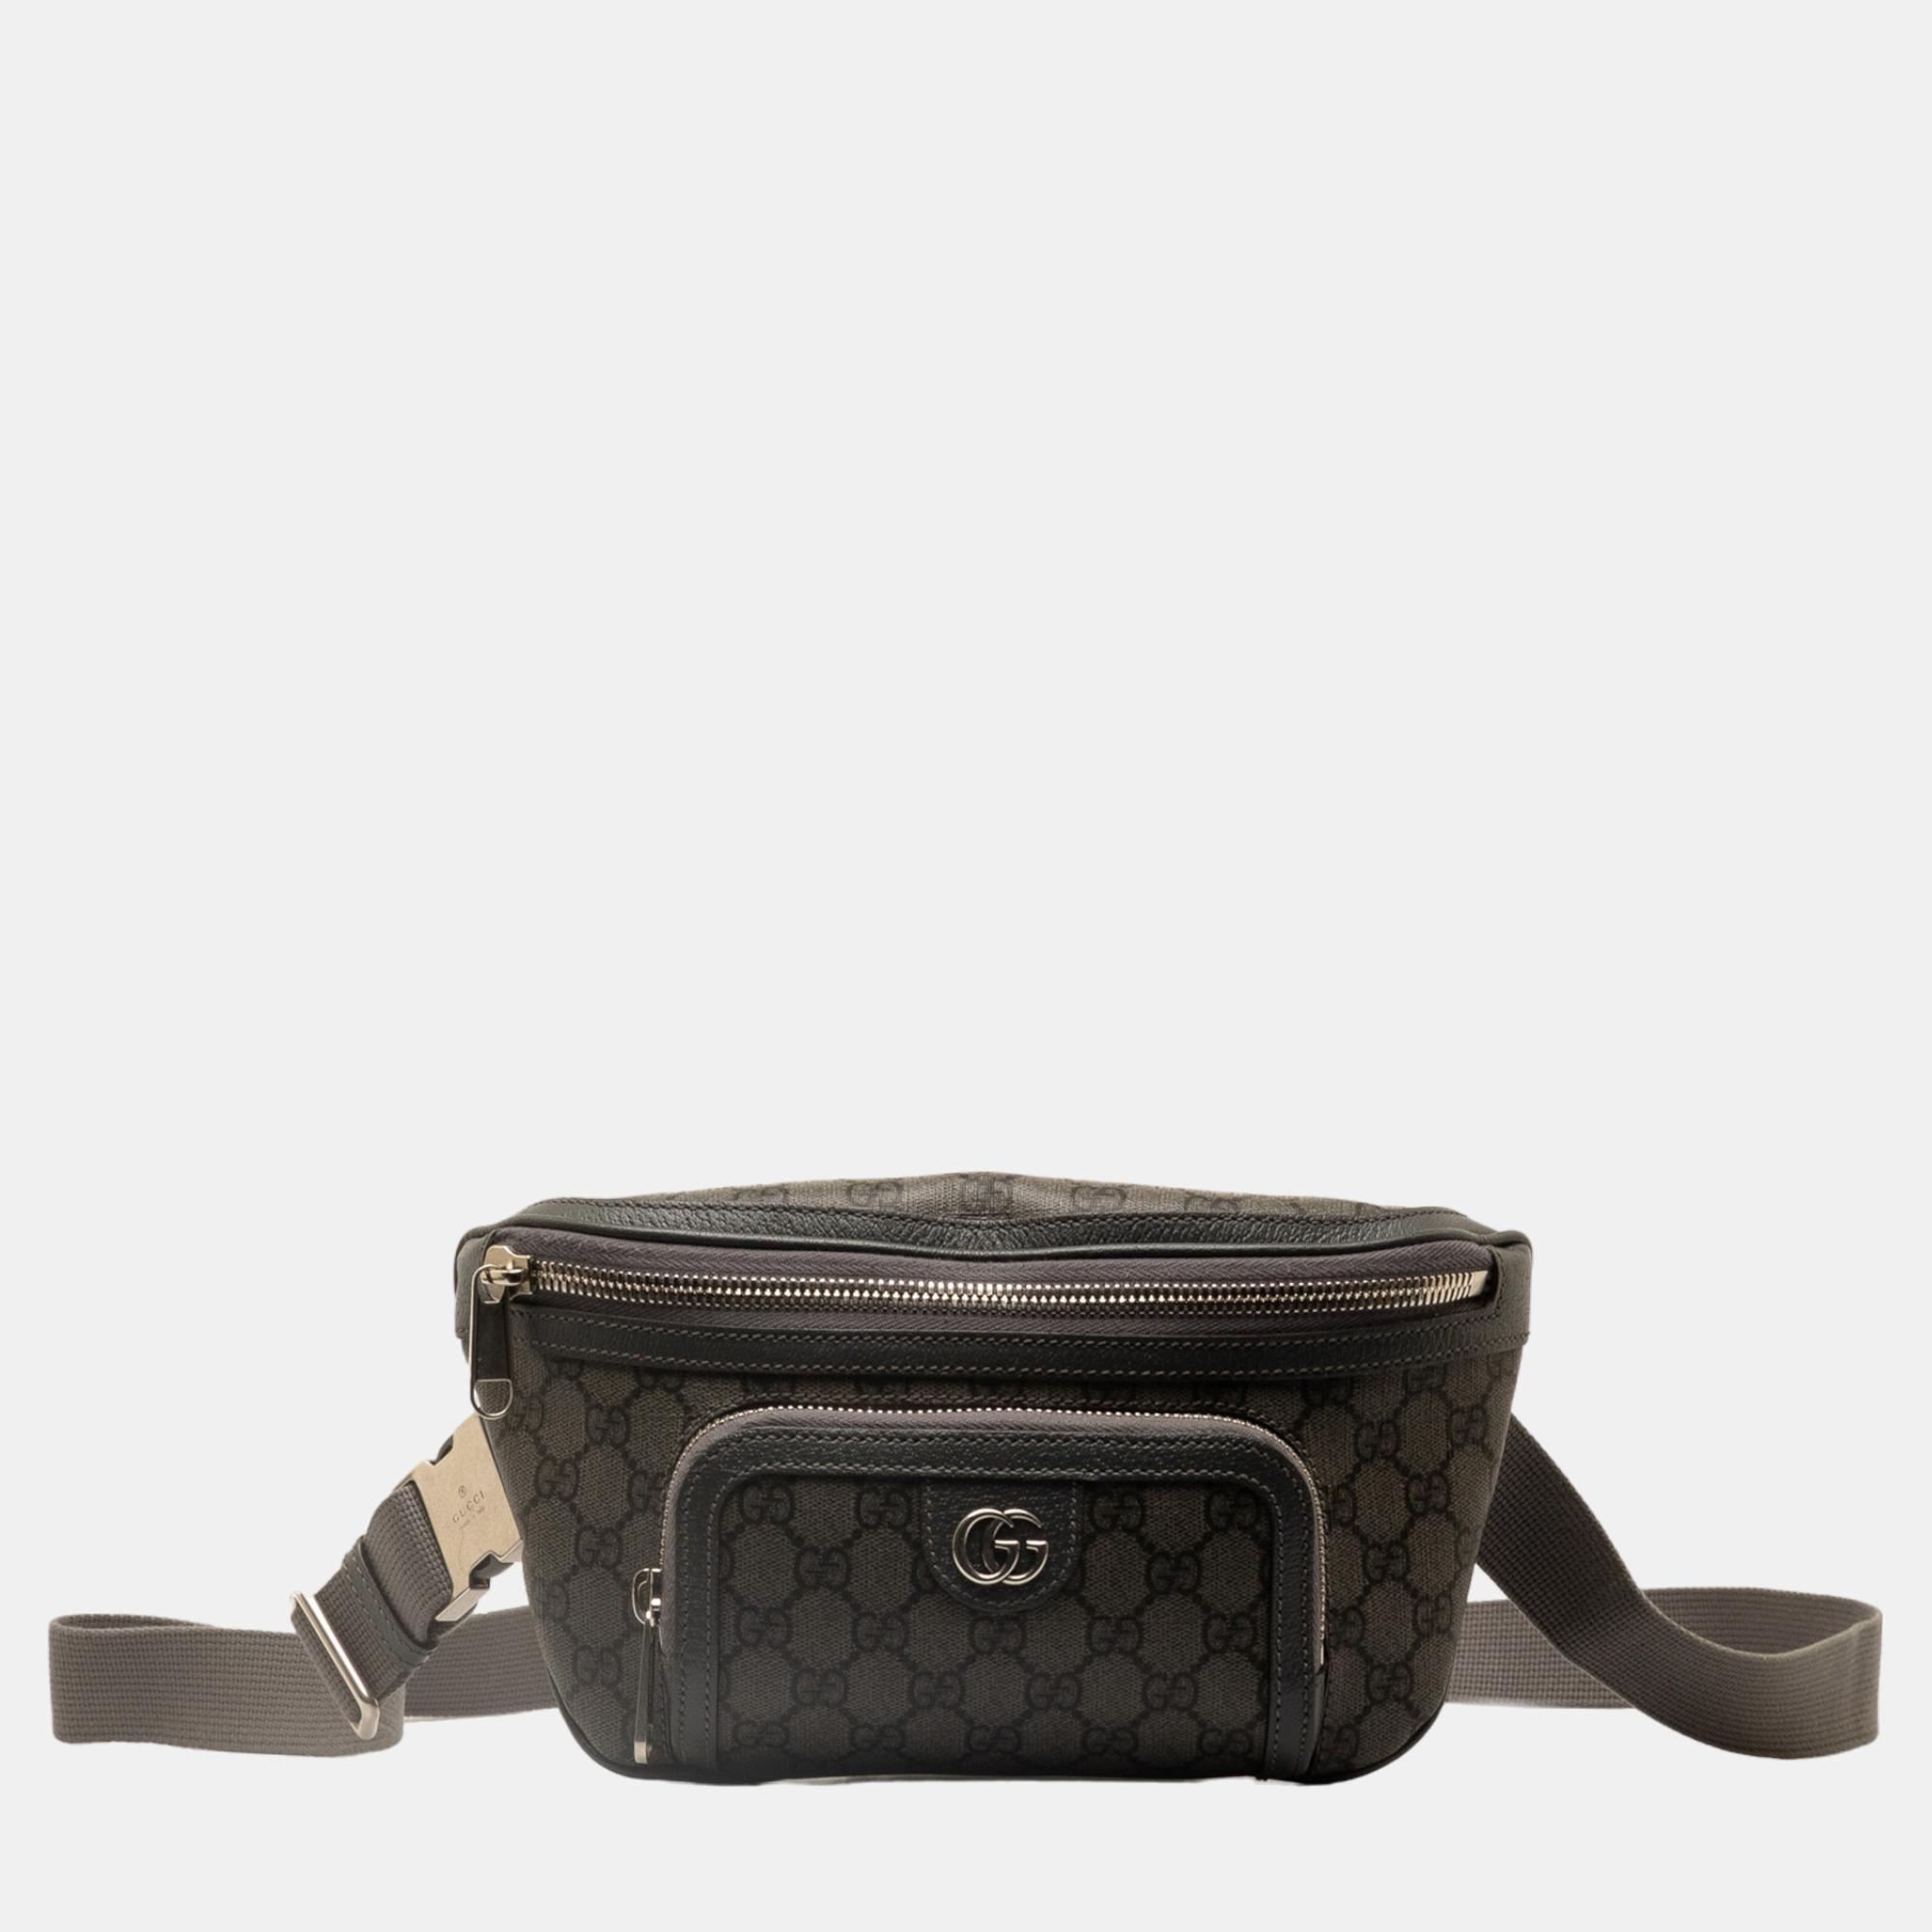 Gucci grey gg supreme ophidia belt bag